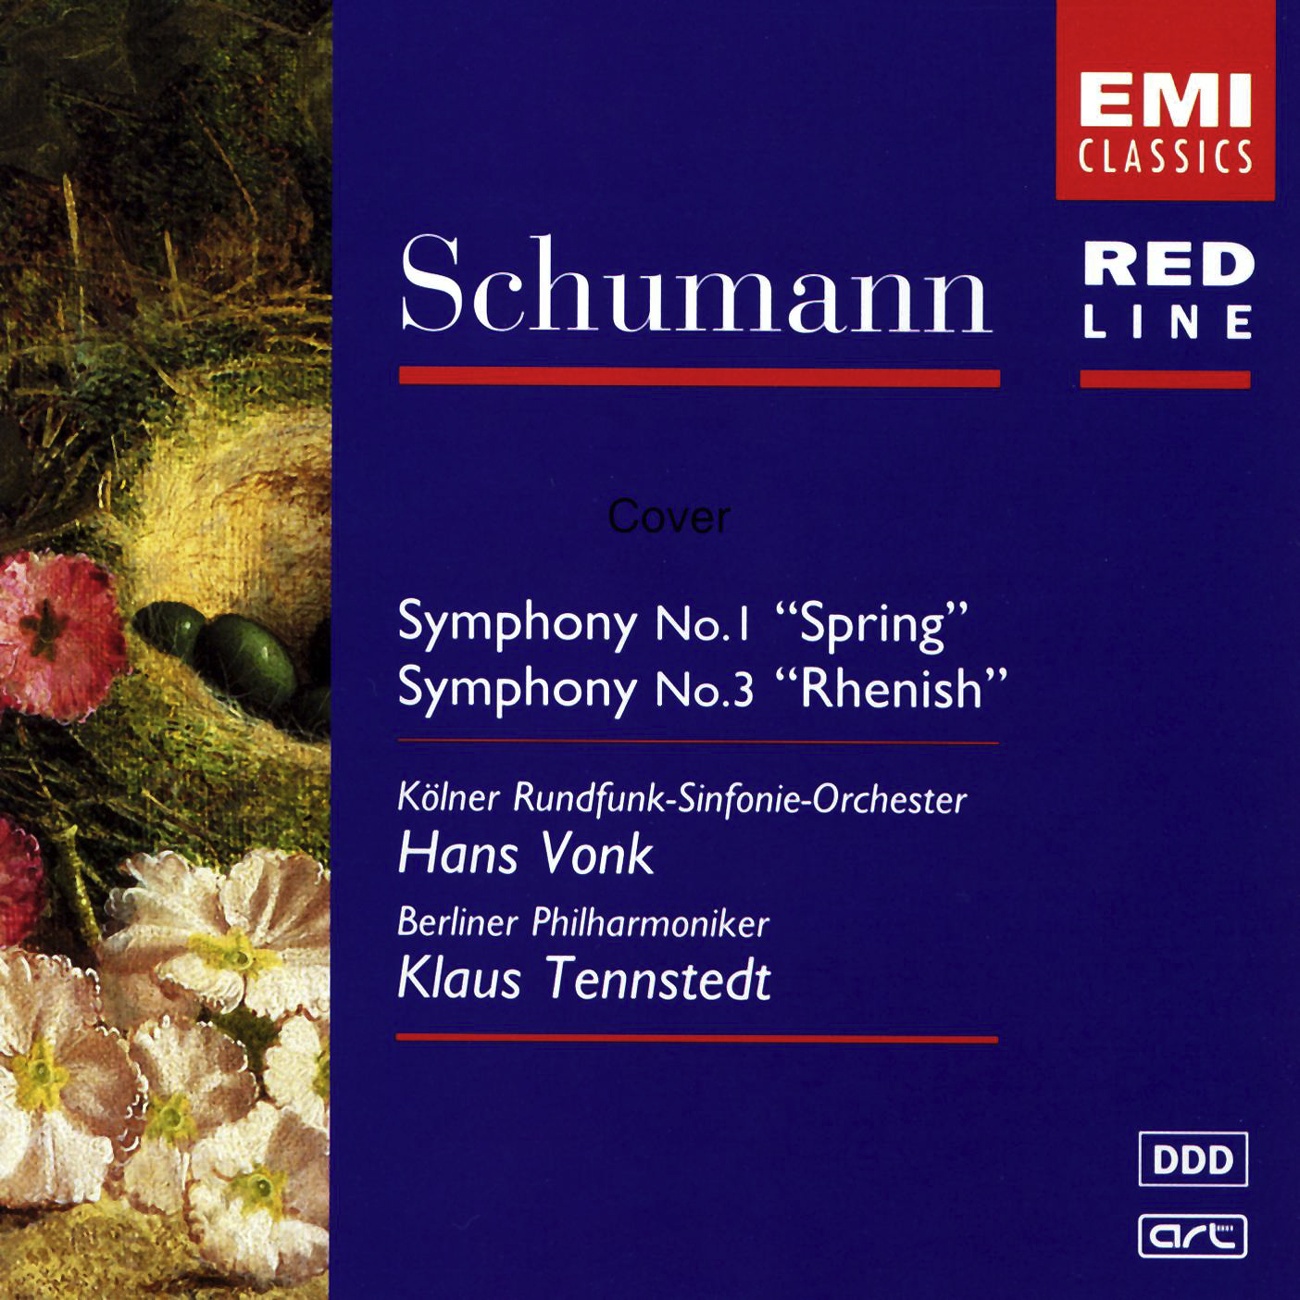 Symphony No. 1 in B flat major, 'Spring' Op. 38 (Live-Recording): I.   Andante un poco maestoso - Allegro molto vivace